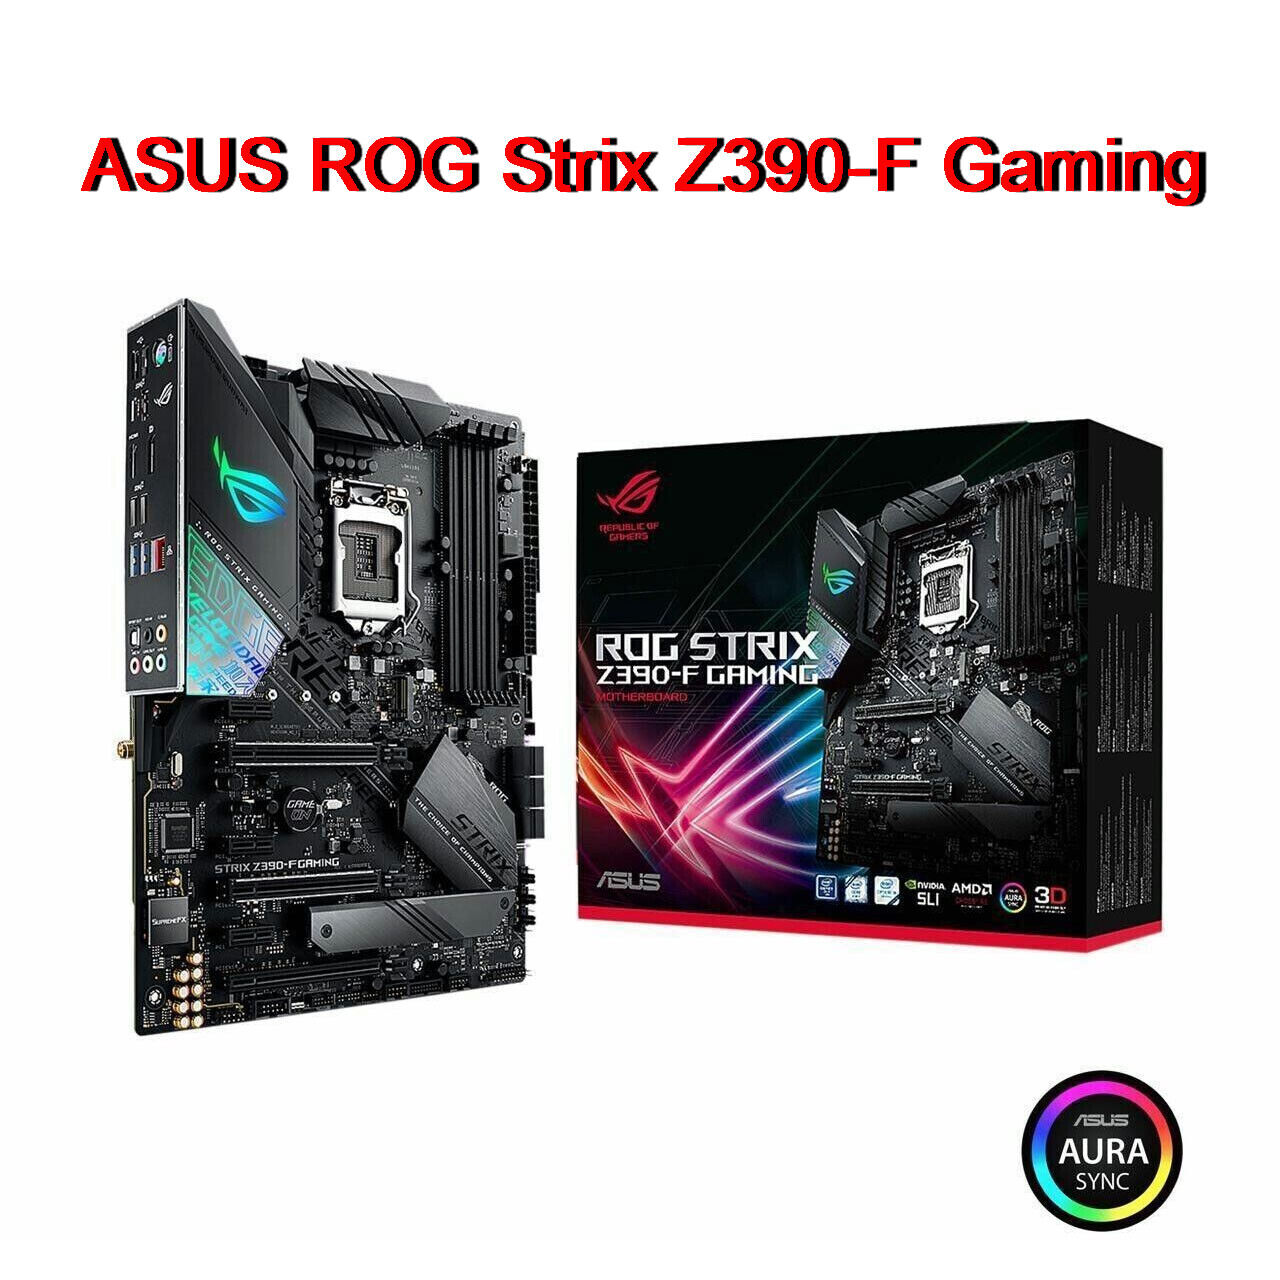 NEW ASUS ROG STRIX Z390-F GAMING Motherboard Intel Z390 ATX LGA1151 DDR4 w/box